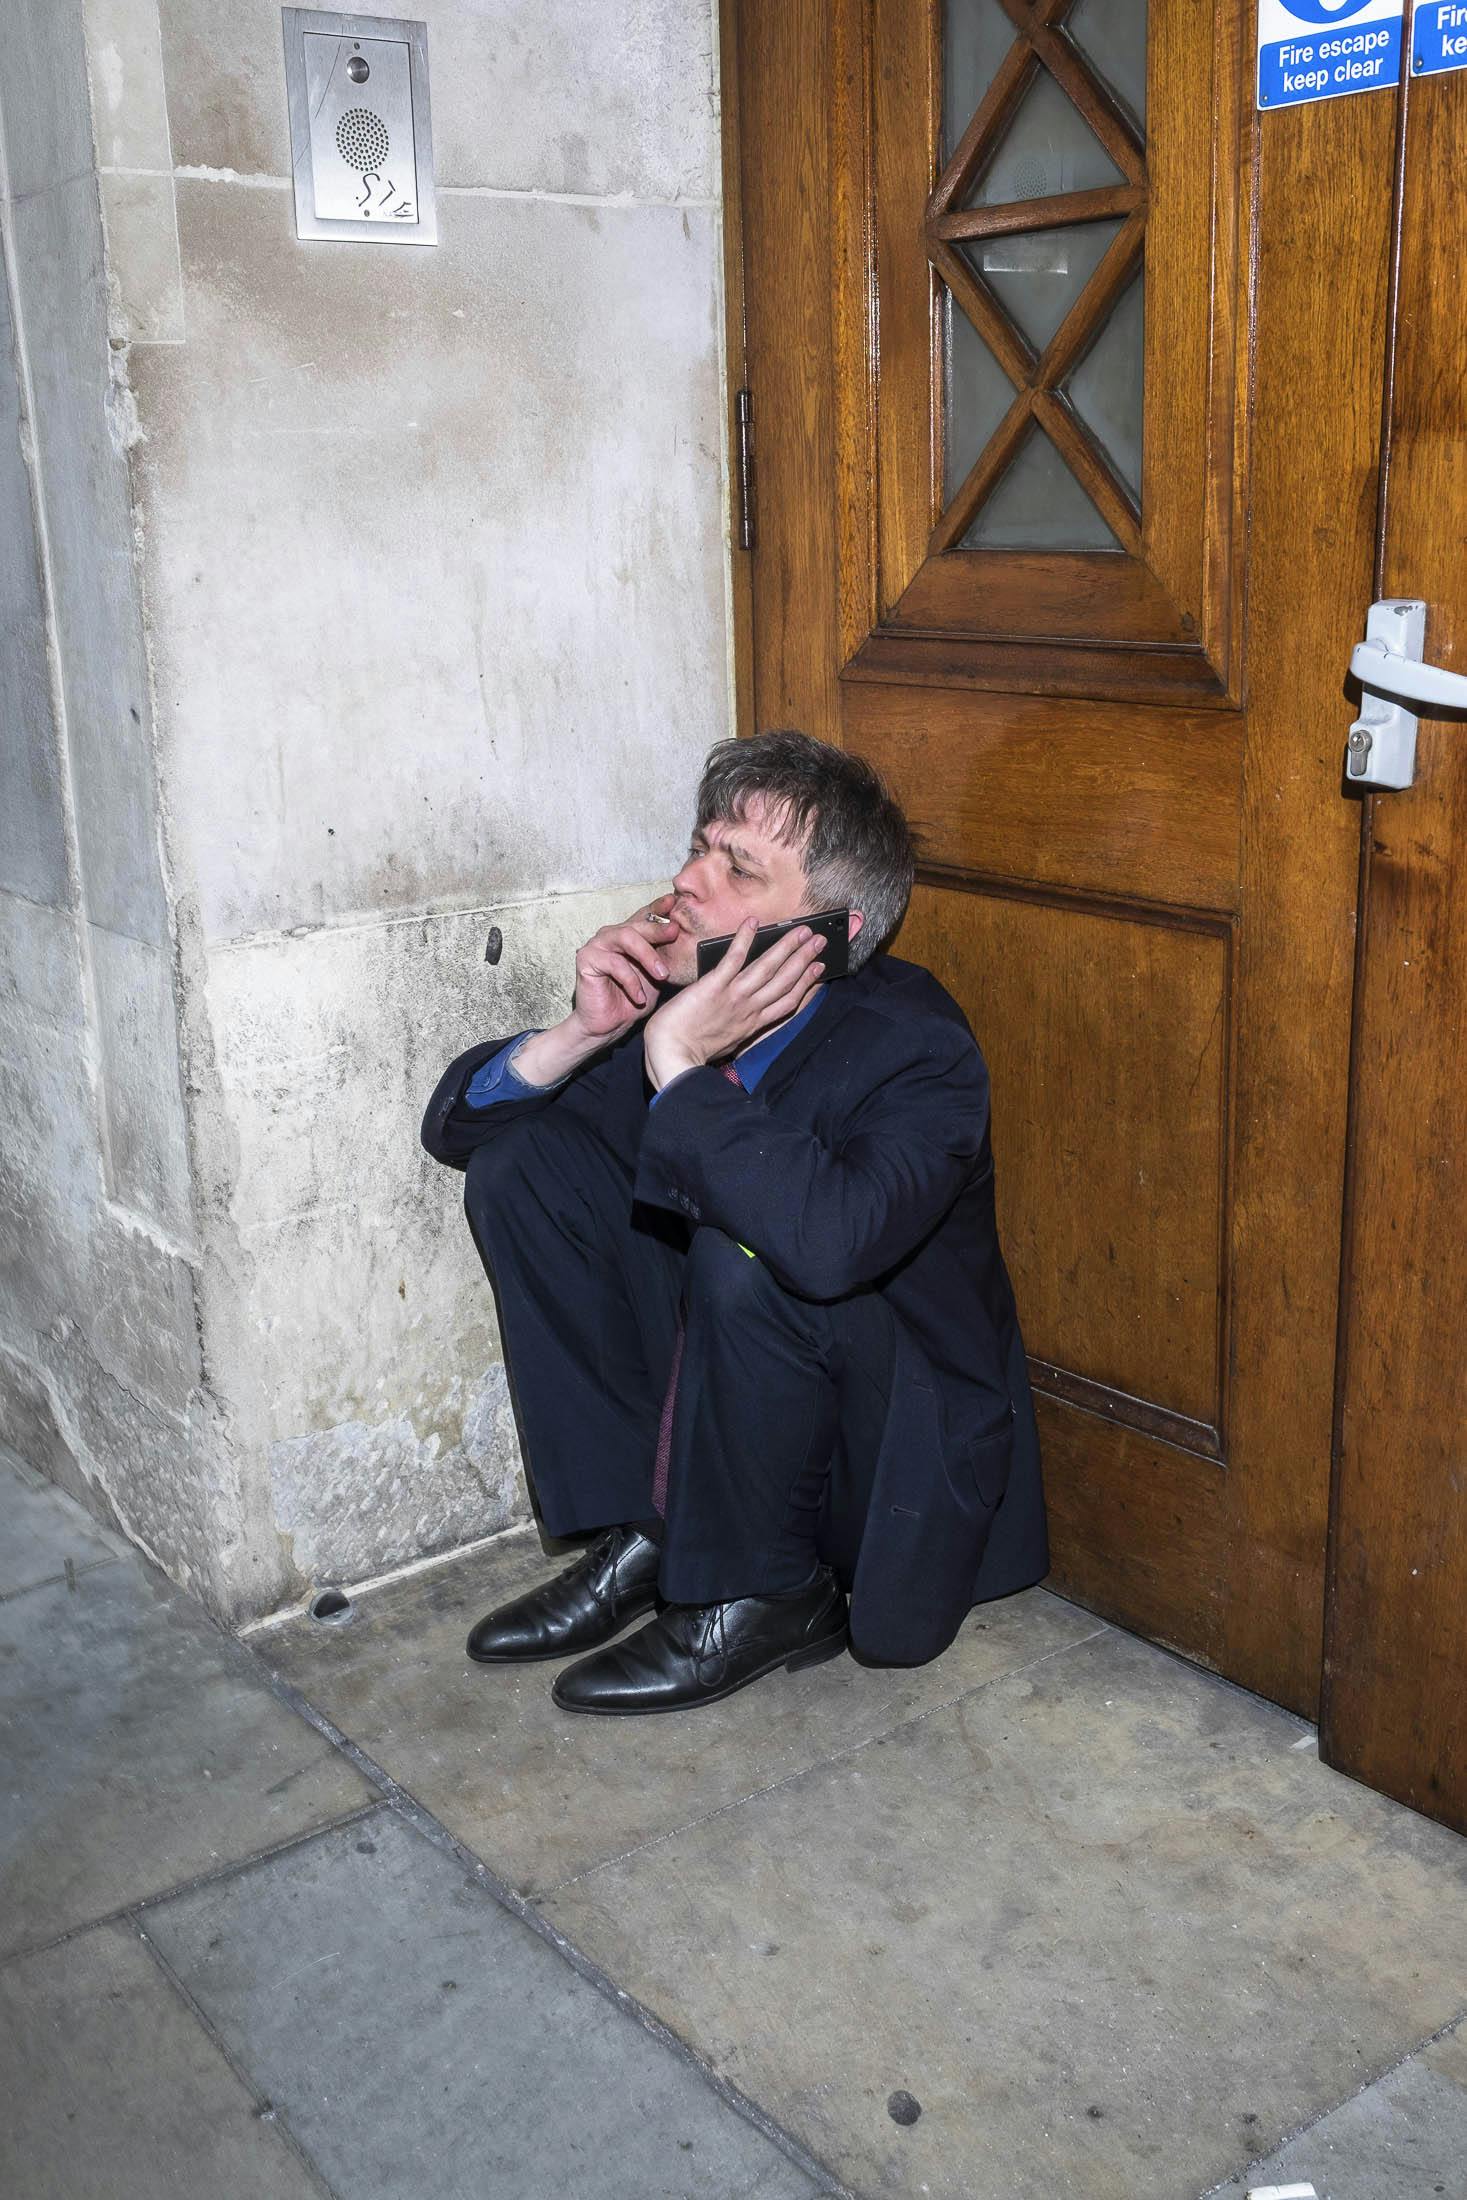 Business man wearing blue suit sat in doorway smoking and on phone